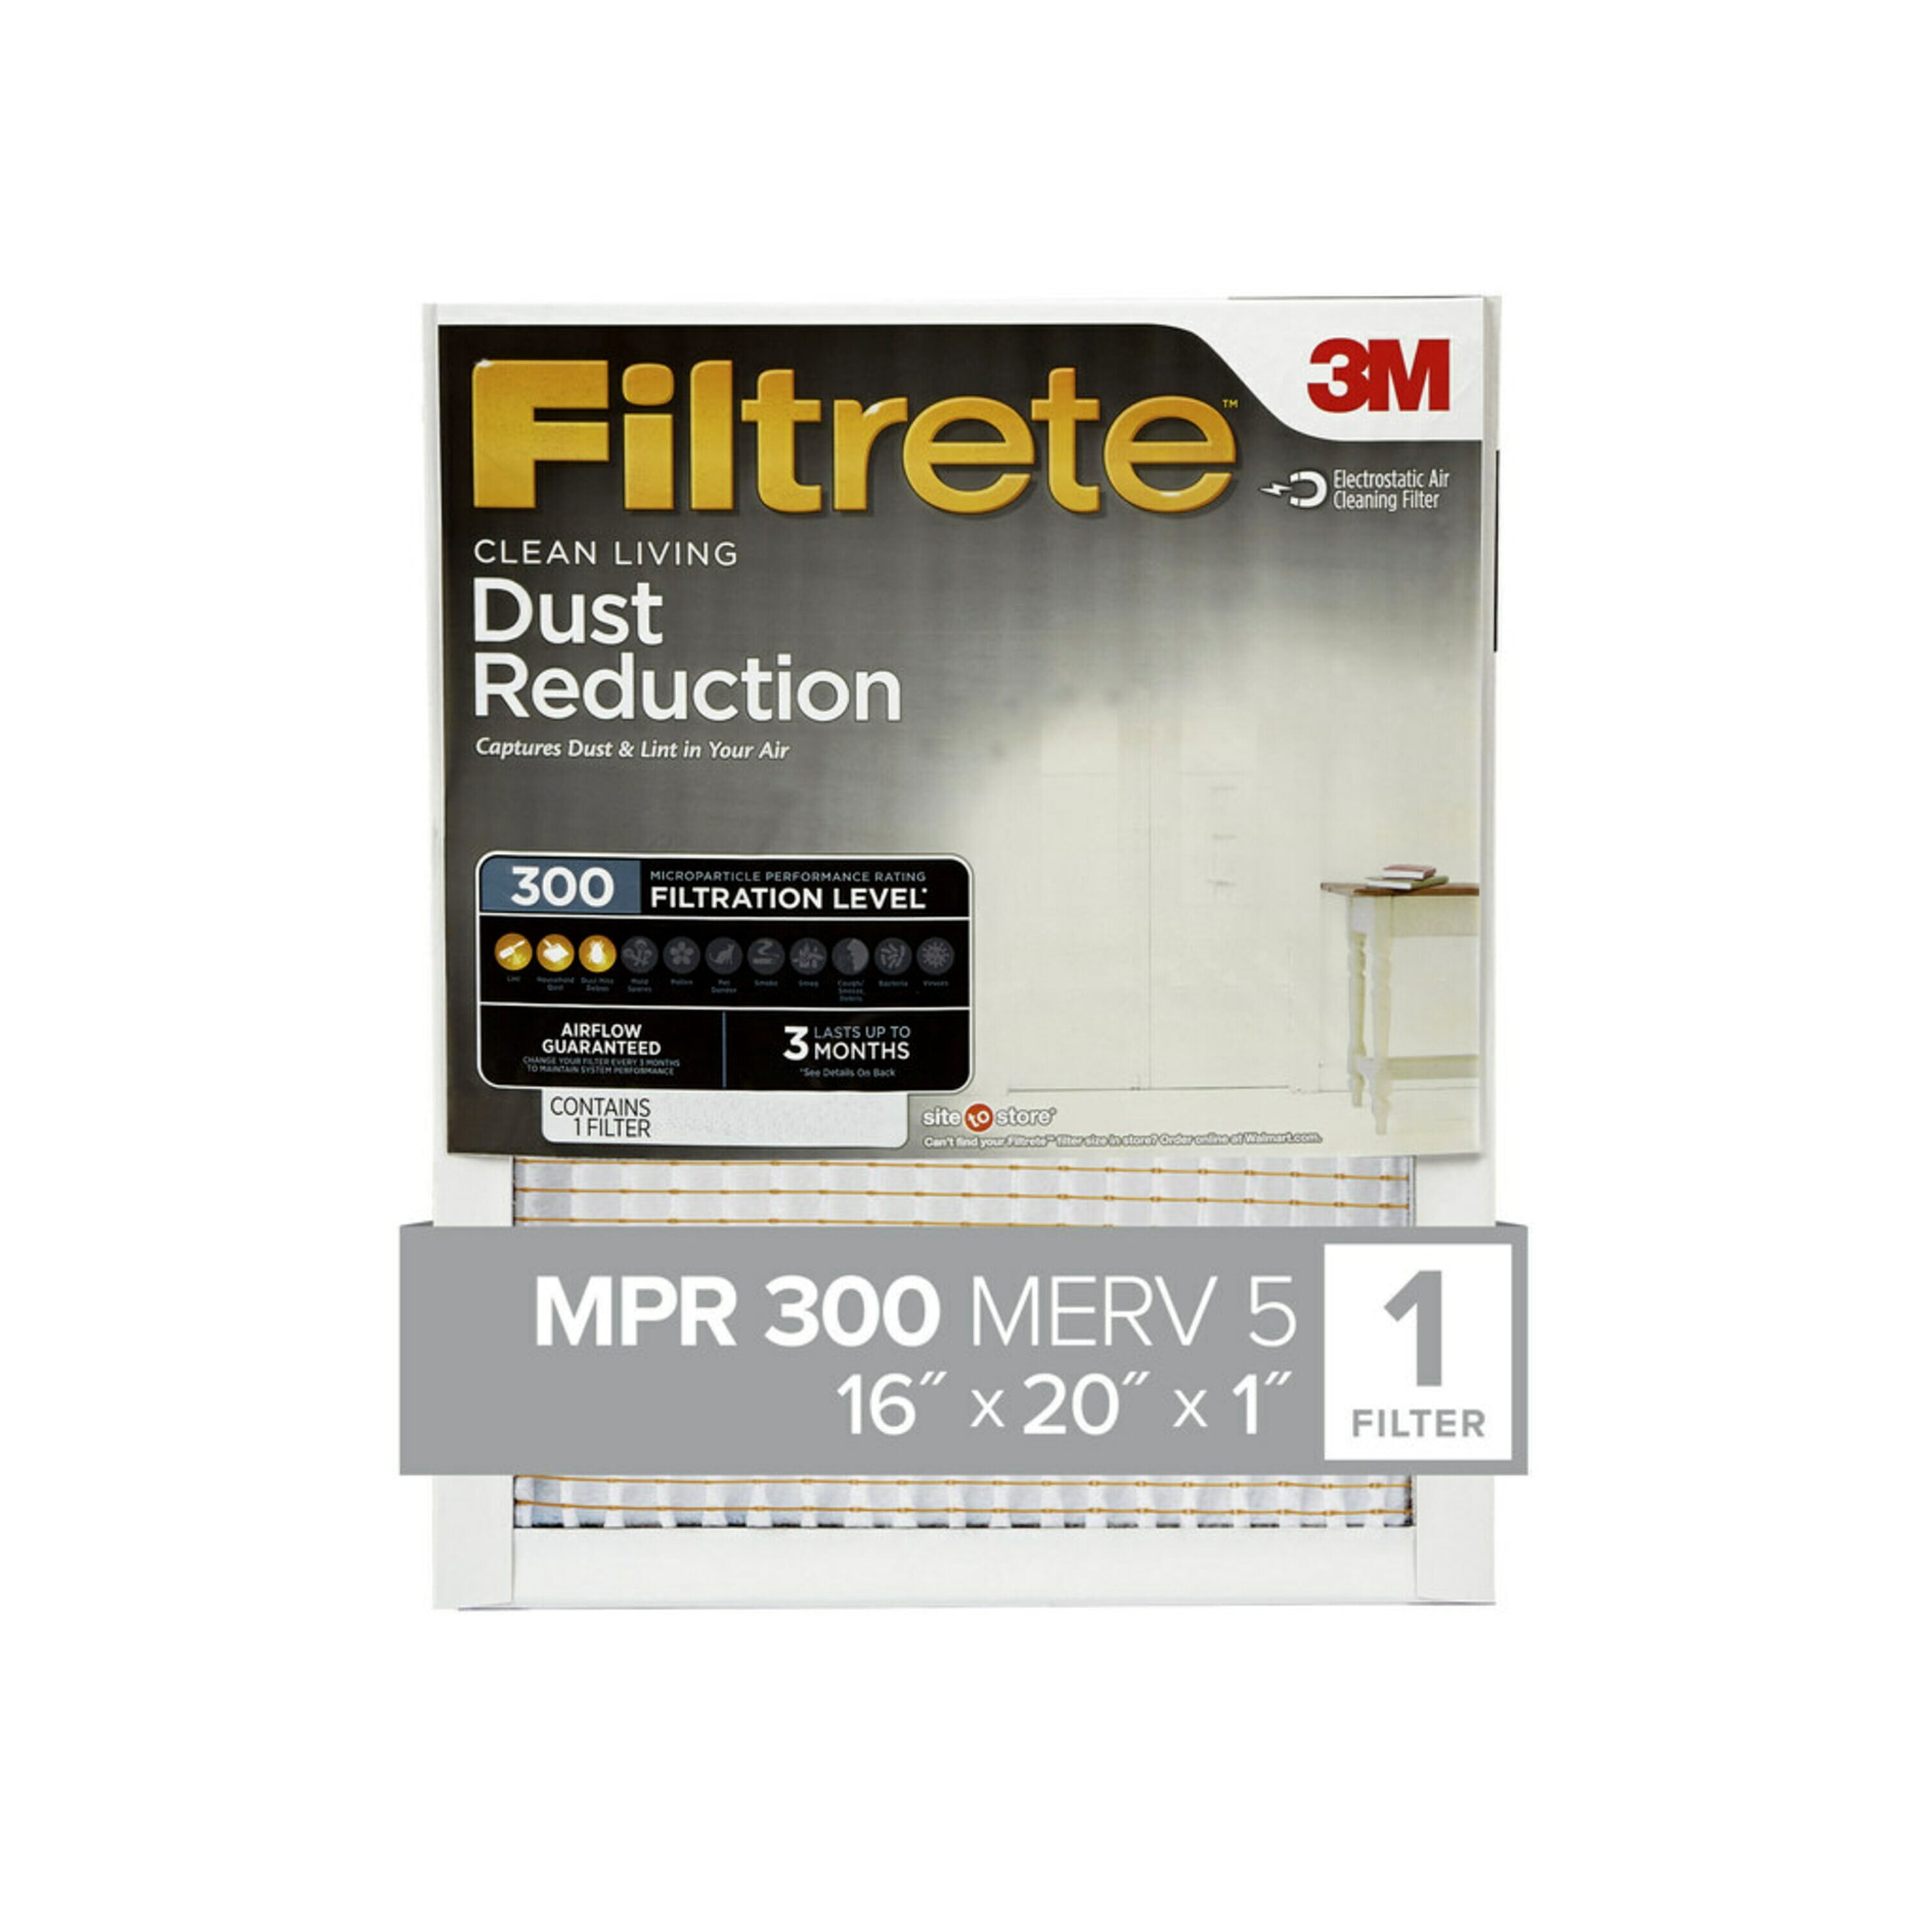 Filtrete 16x20x1, MERV 5, Dust Reduction HVAC Furnace Air Filter, 300 MPR, 1 Filter